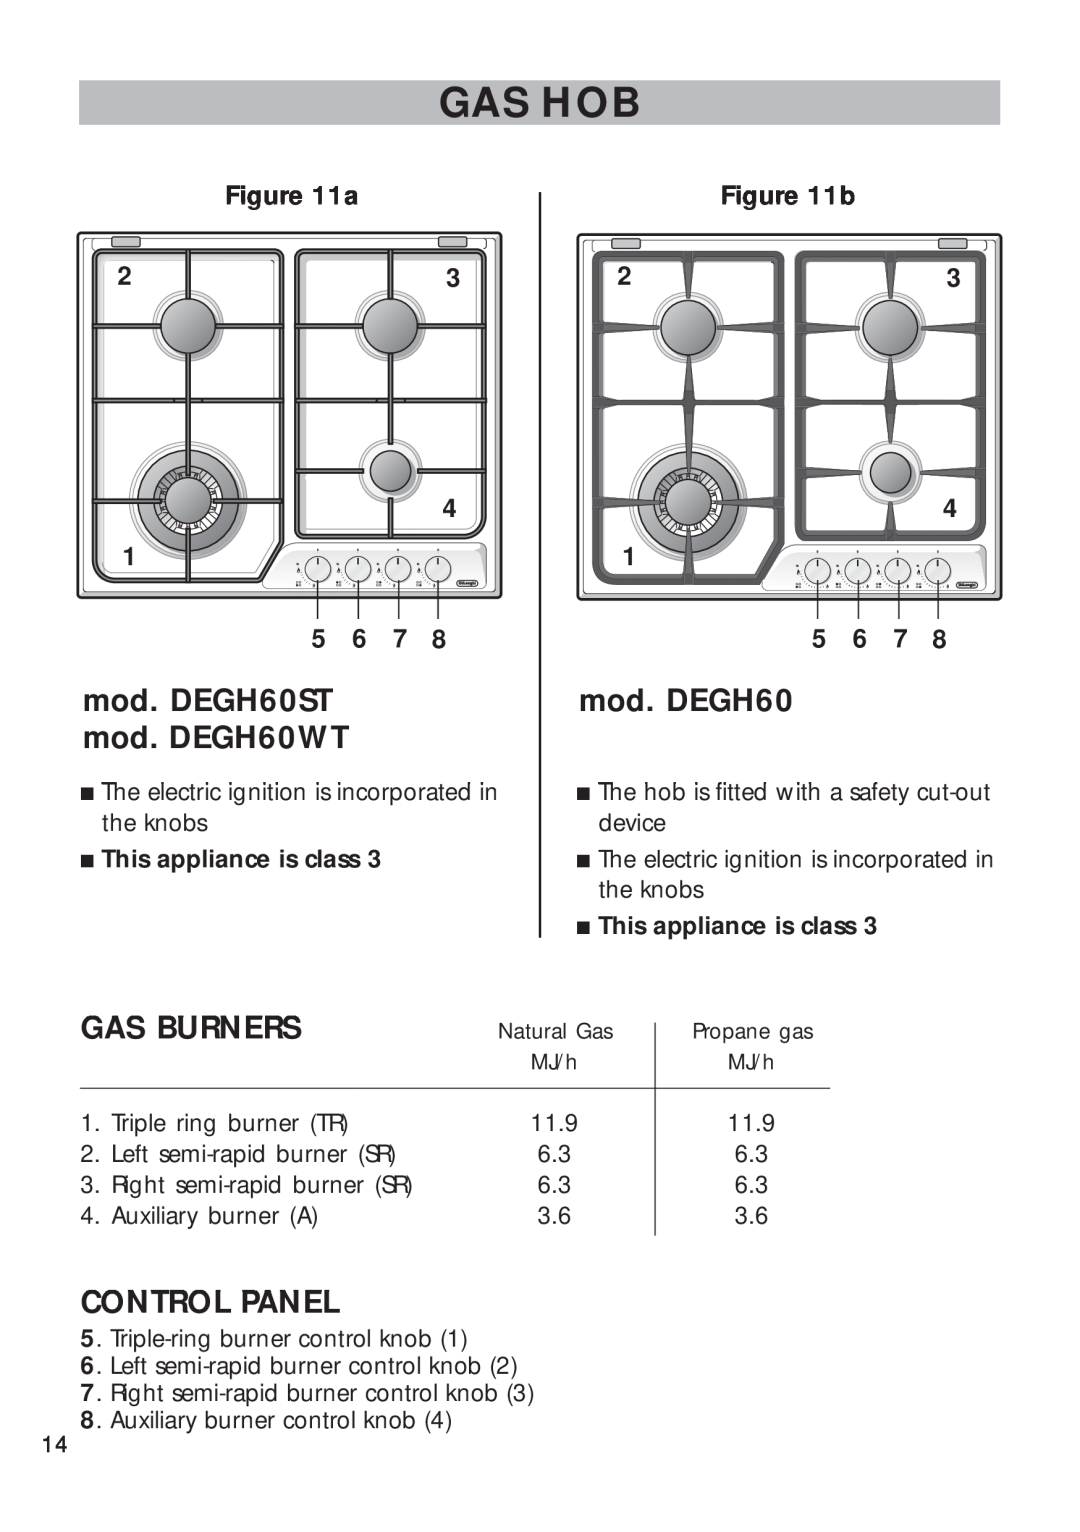 DeLonghi manual Gas Hob, mod. DEGH60ST, mod. DEGH60WT, Gas Burners, Control Panel 